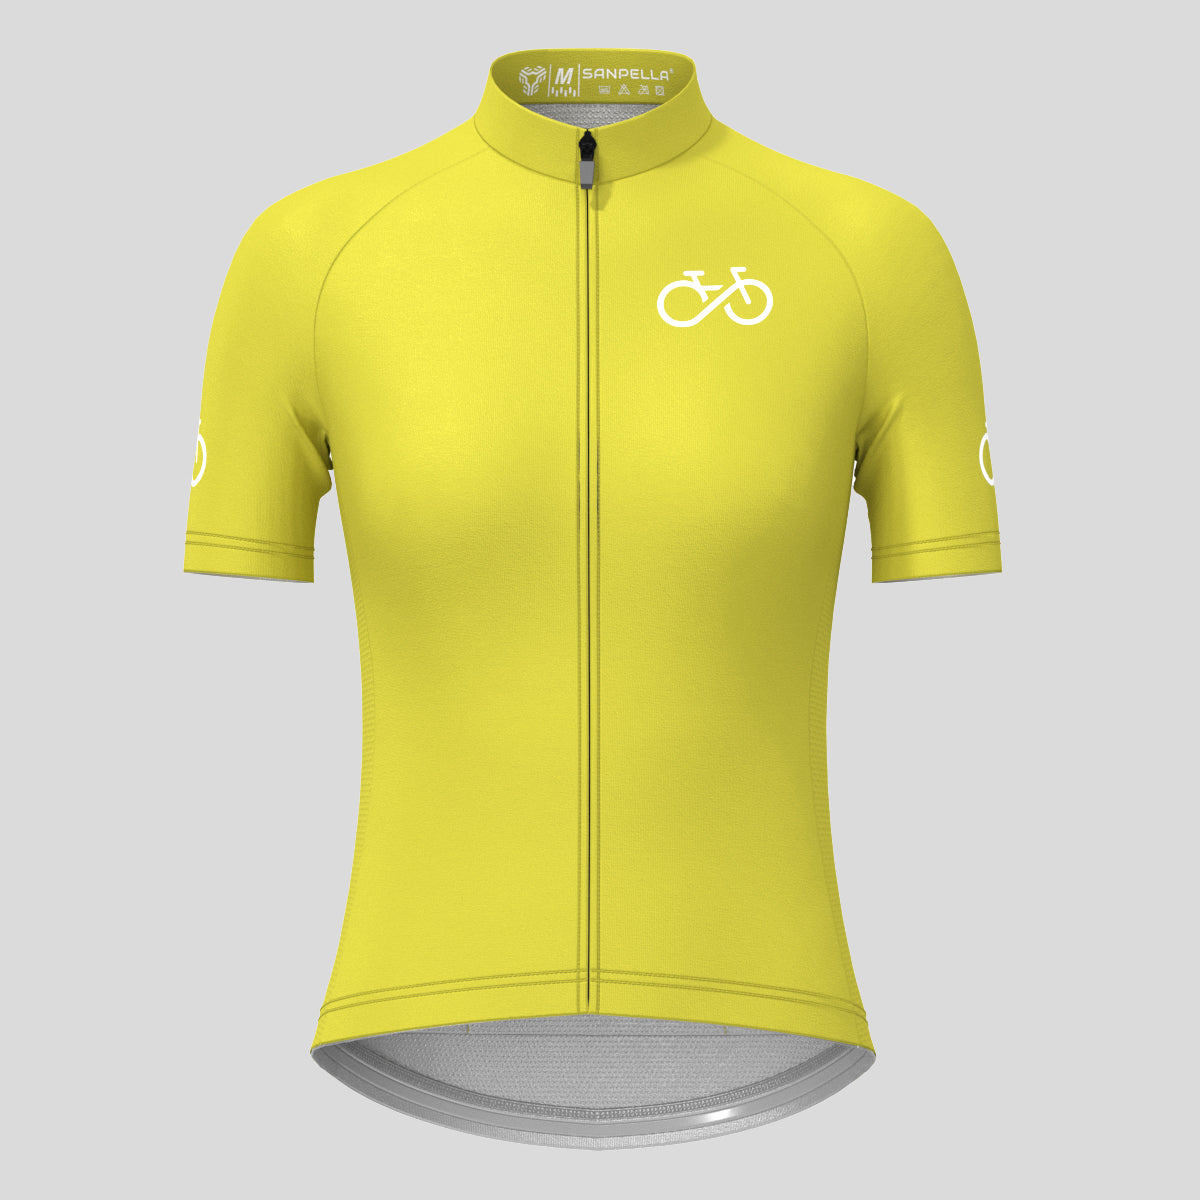 Ride Forever Women's Cycling Jersey - Fern